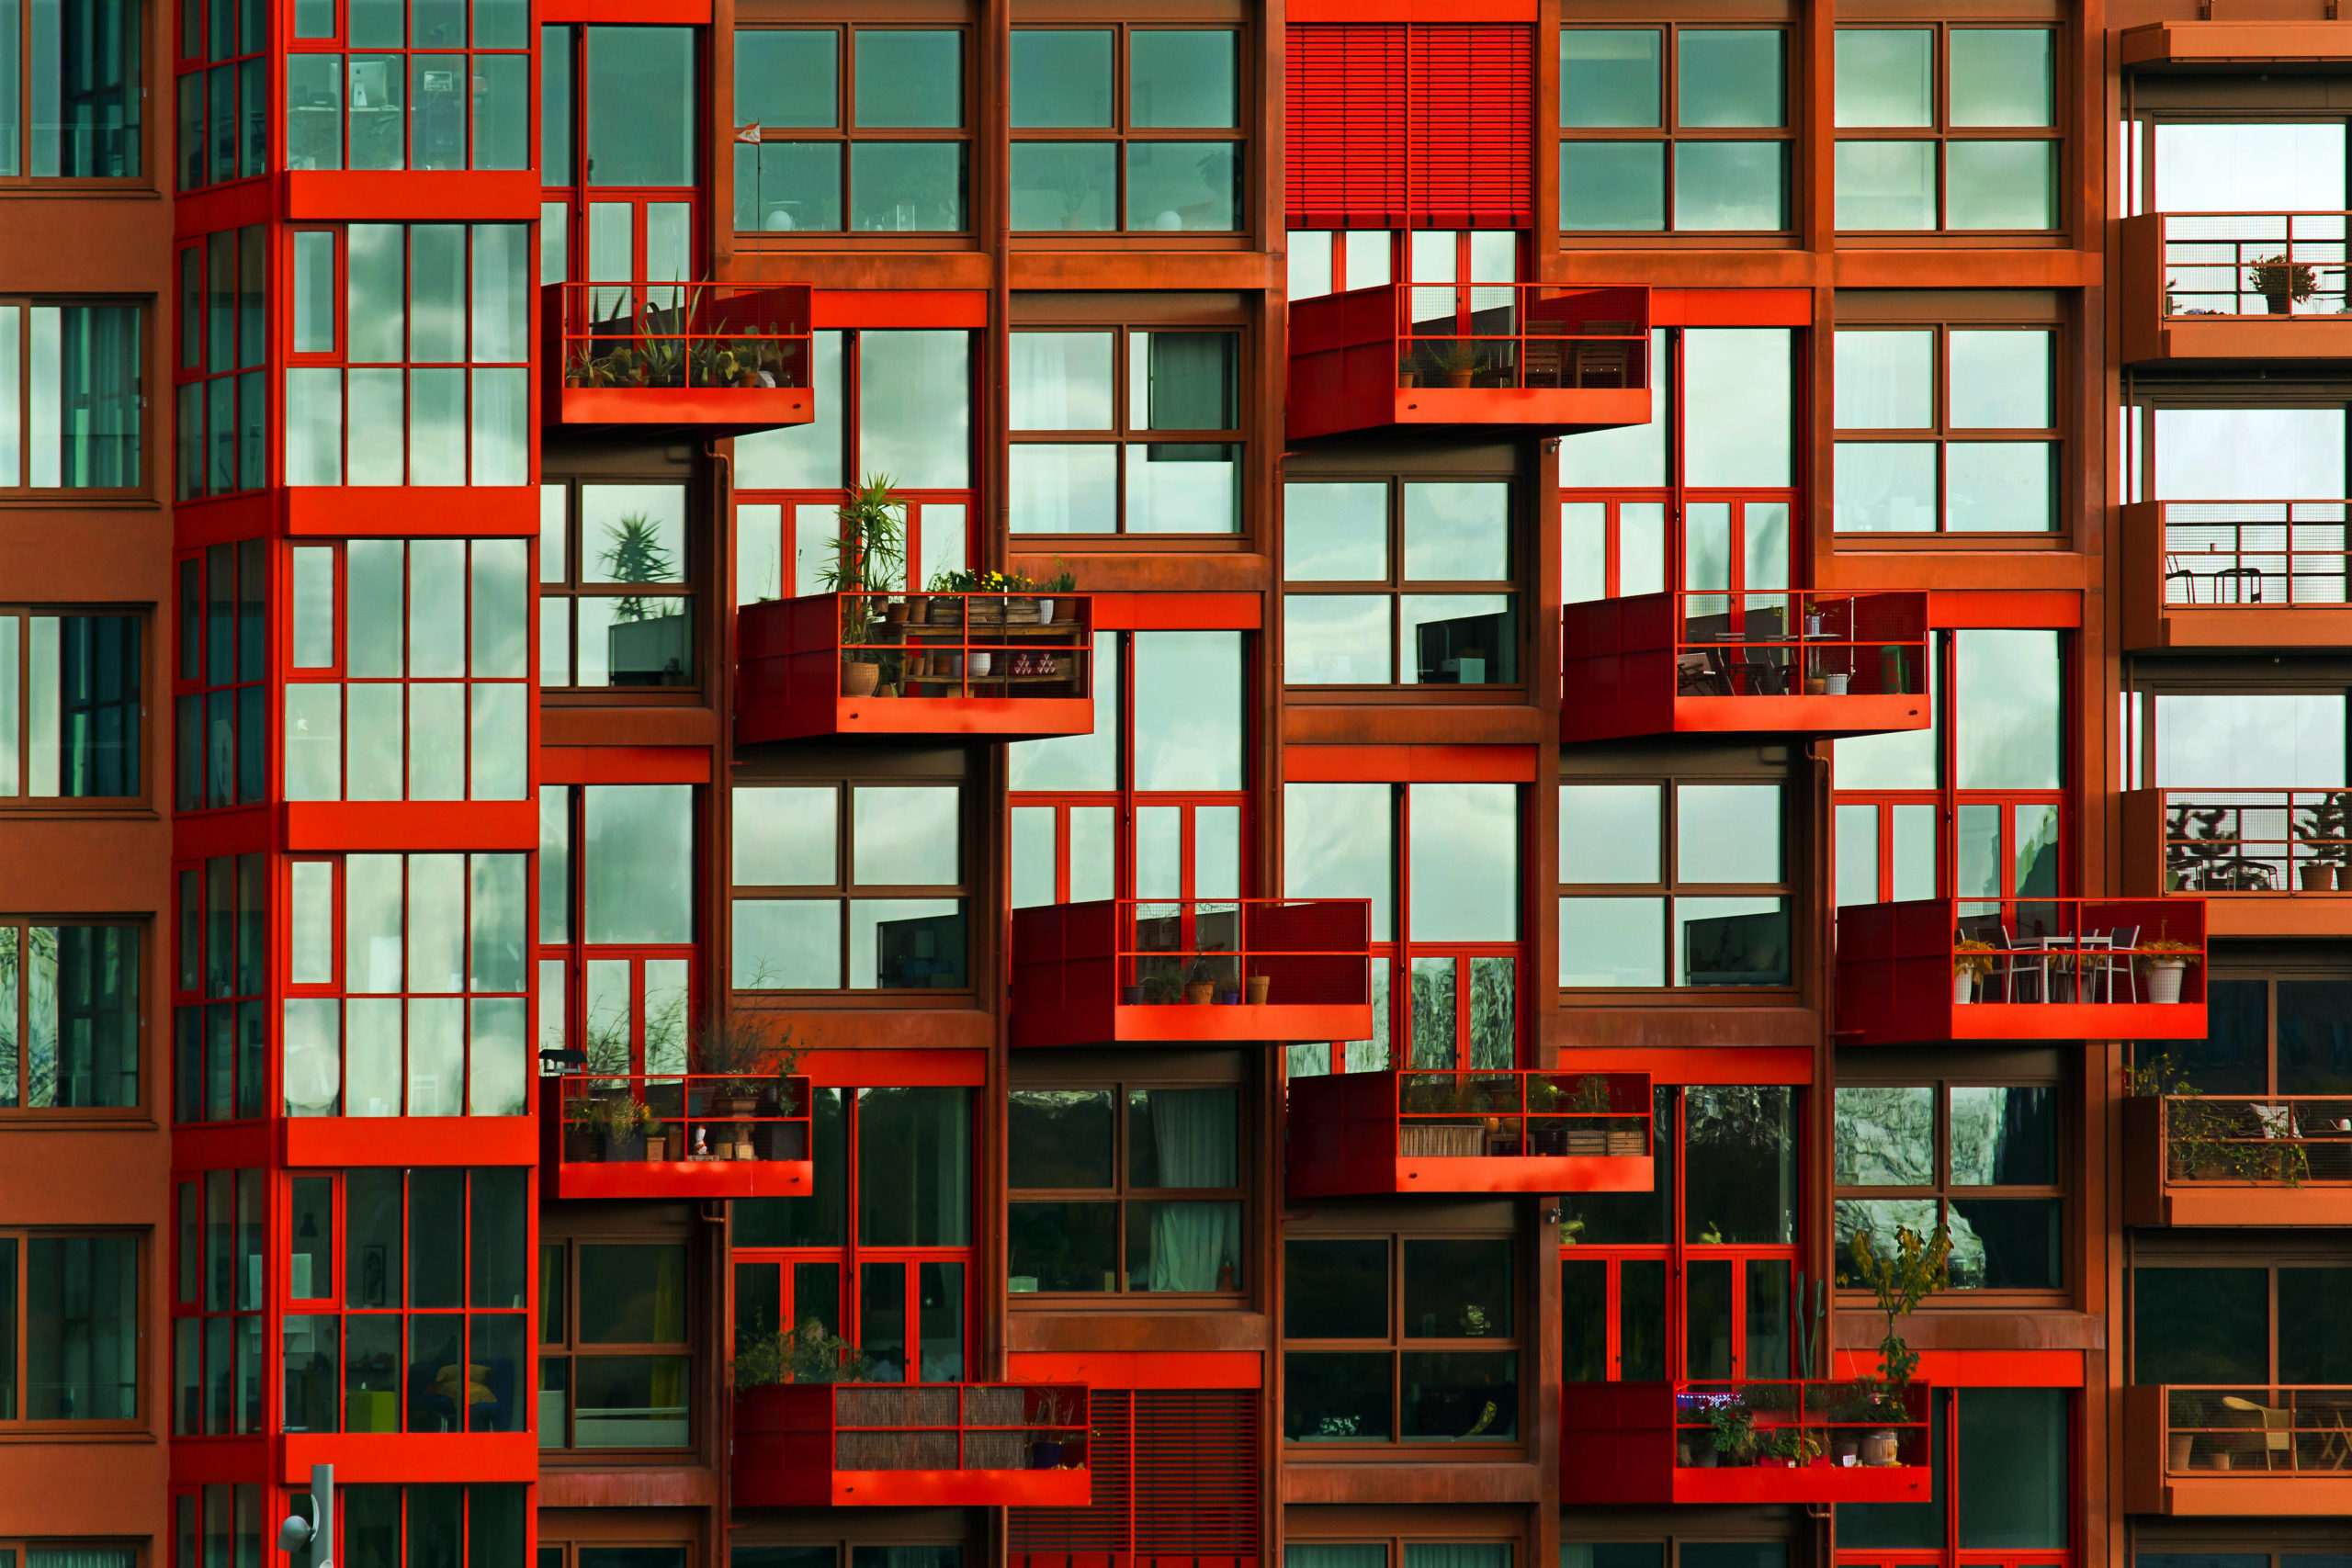 Markantes Wohnhaus mit roter Fassade. Foto: Imago/Shotshop